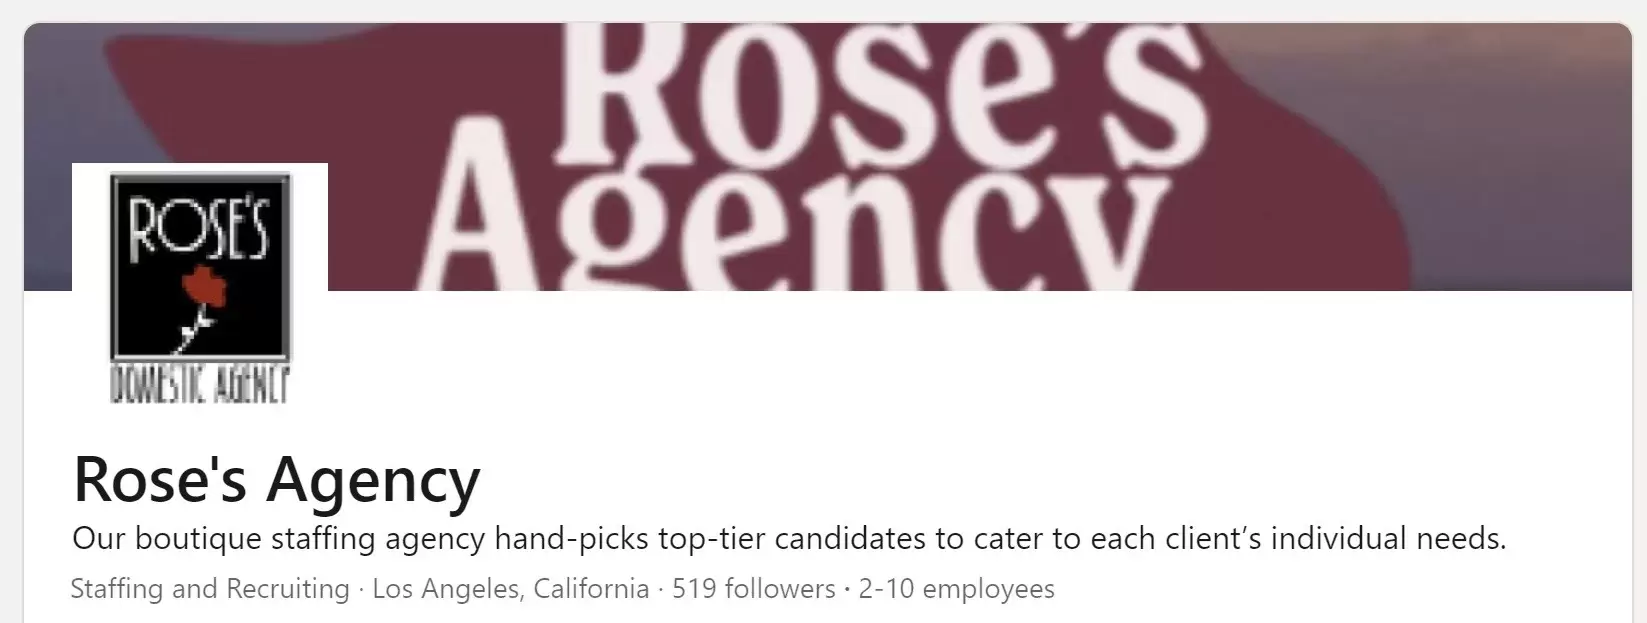 Rose's Agency on LinkedIn